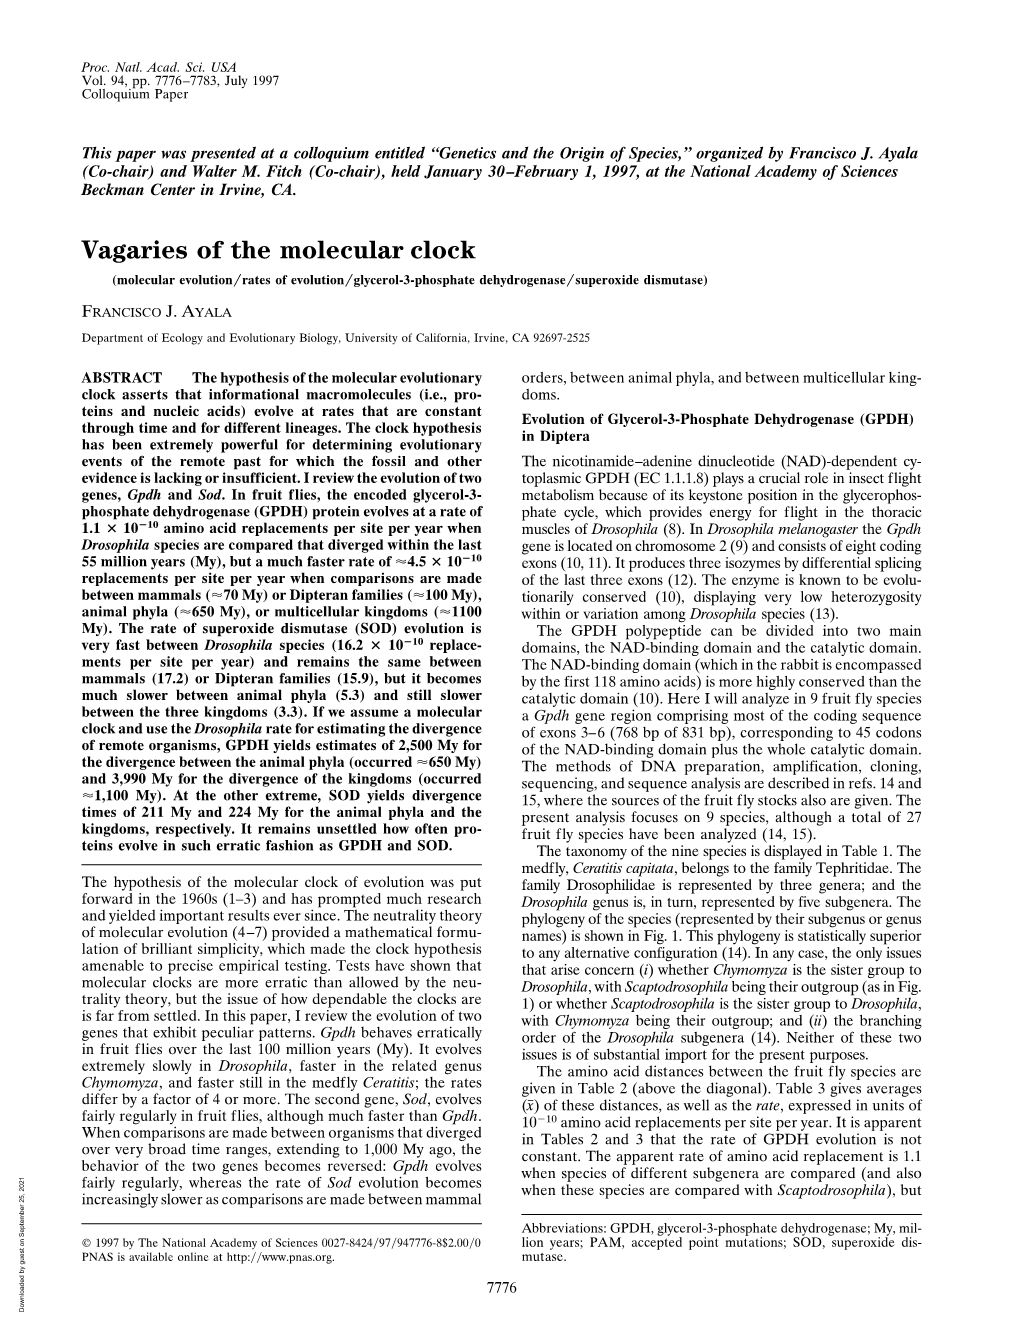 Vagaries of the Molecular Clock (Molecular Evolution͞rates of Evolution͞glycerol-3-Phosphate Dehydrogenase͞superoxide Dismutase)